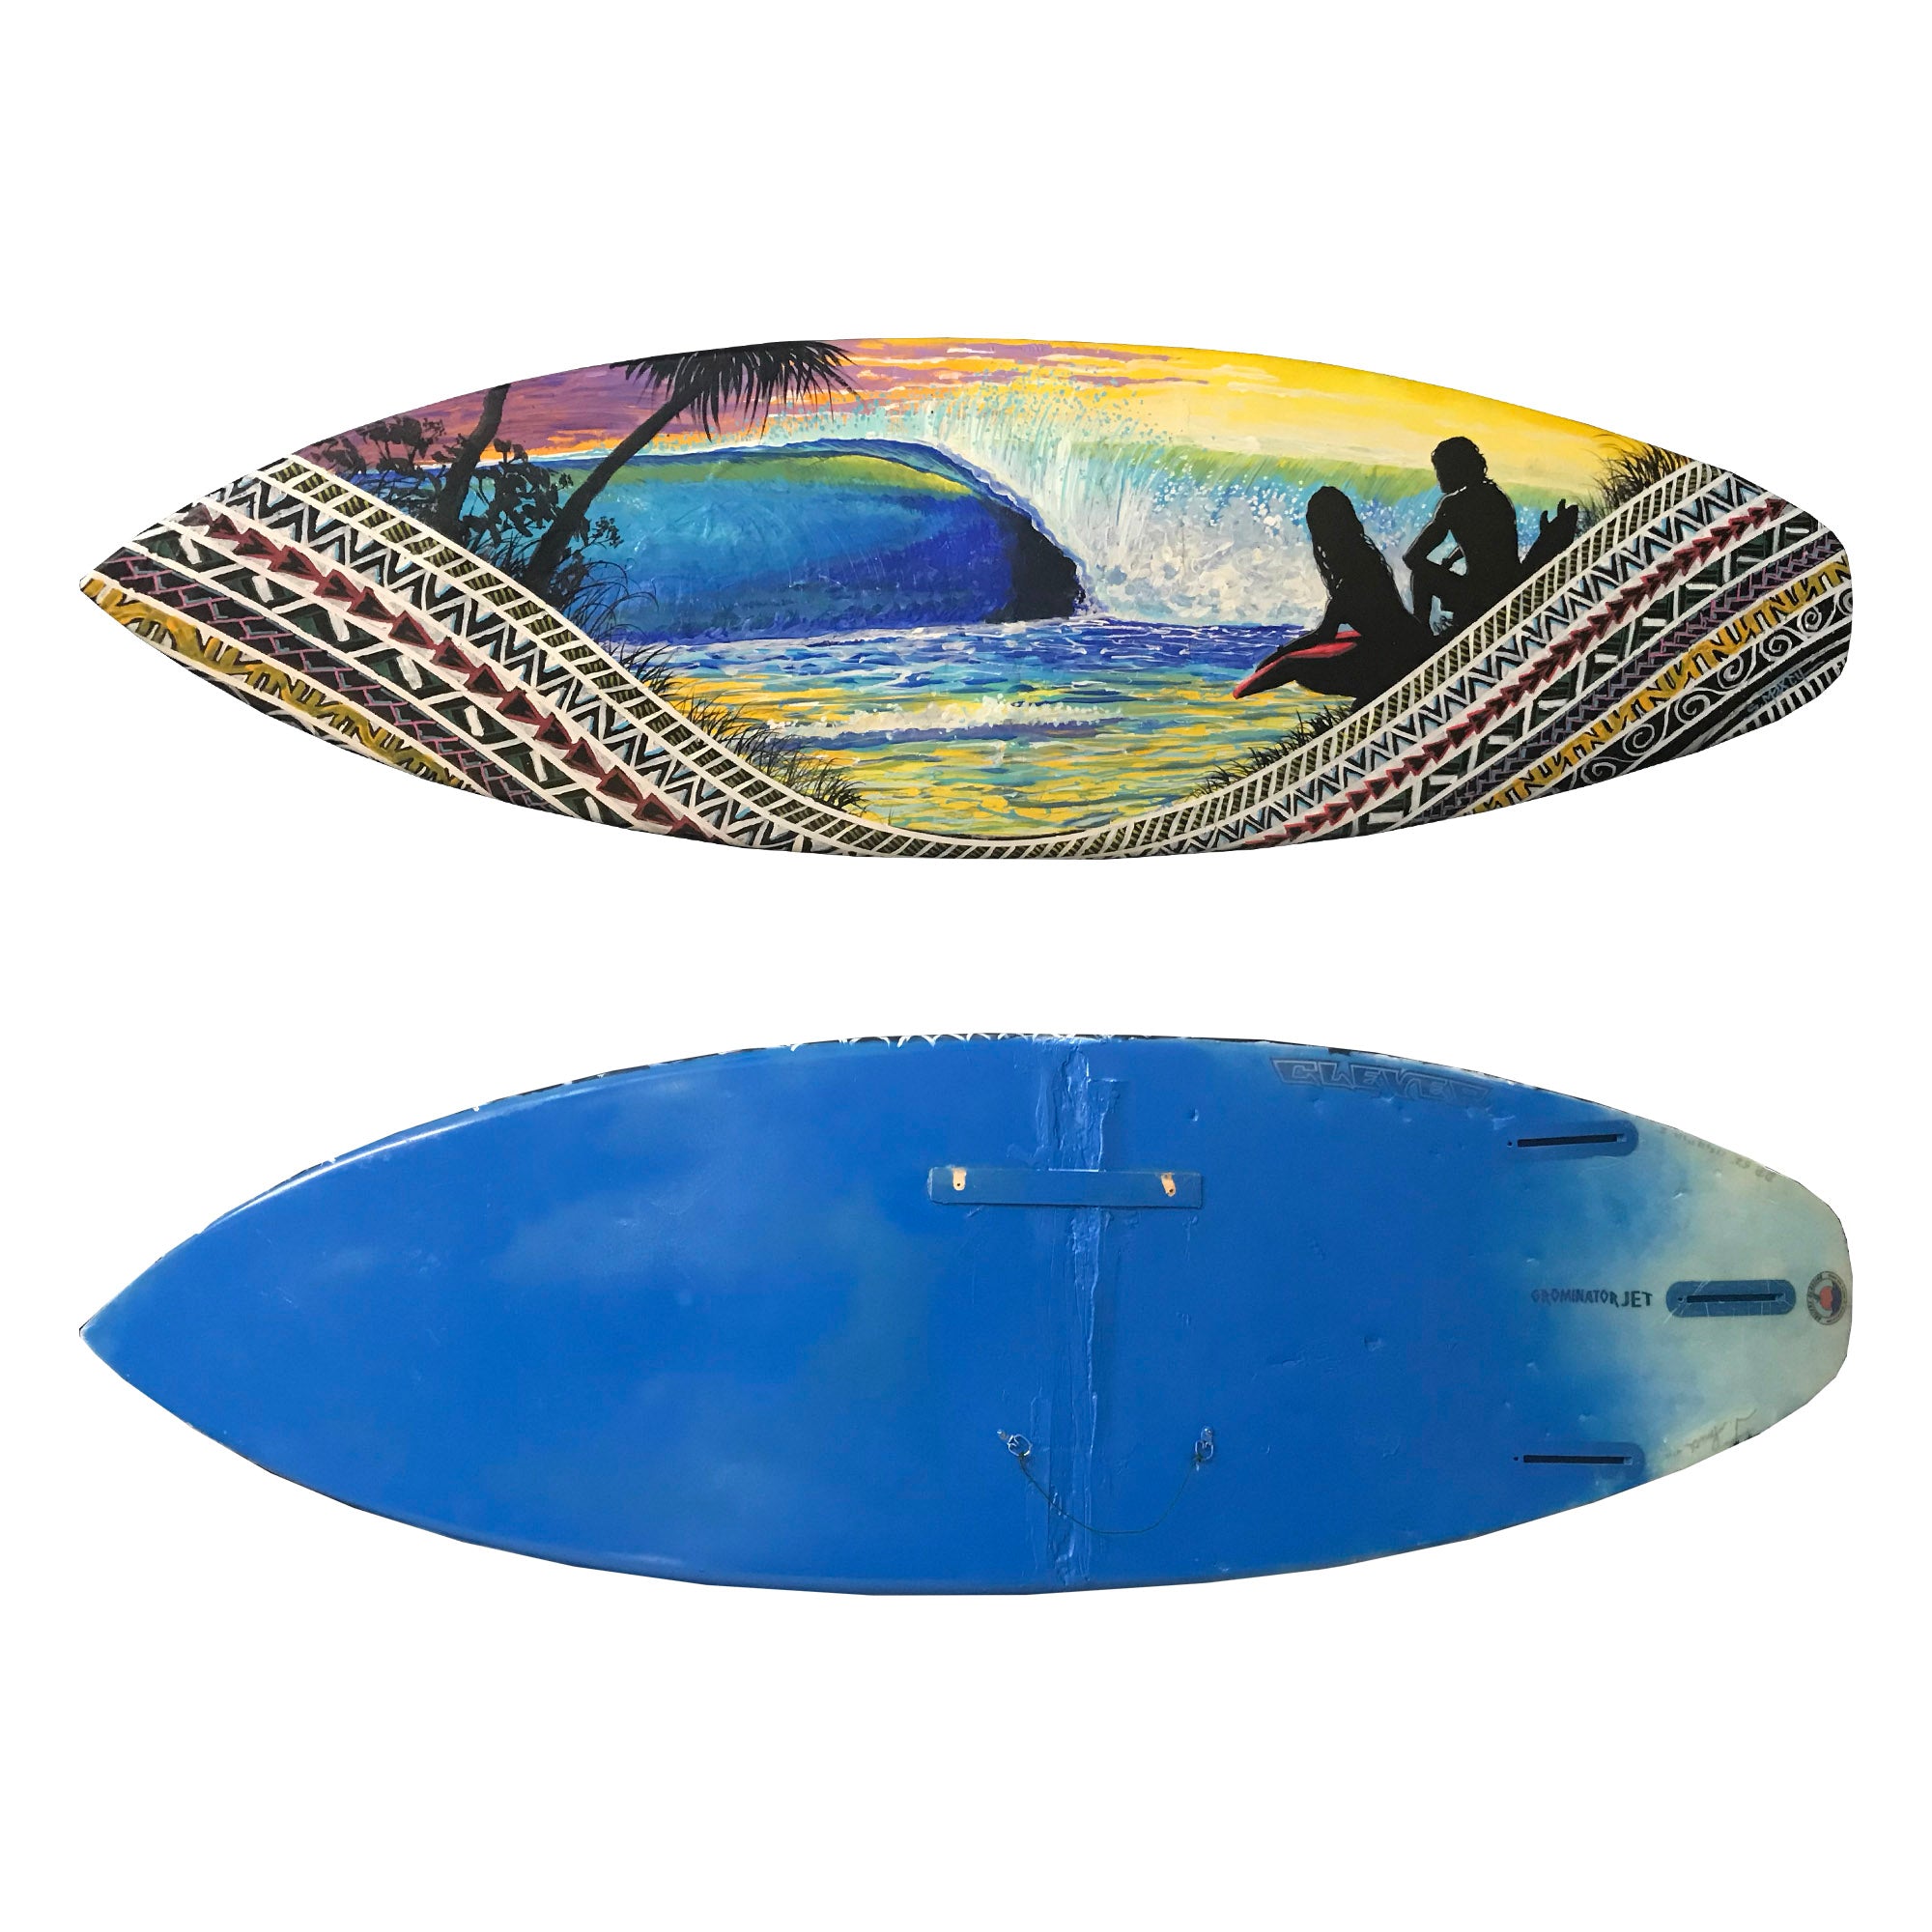 Stewart Maxcy Tribal Barrel Original Art Collector Surfboard